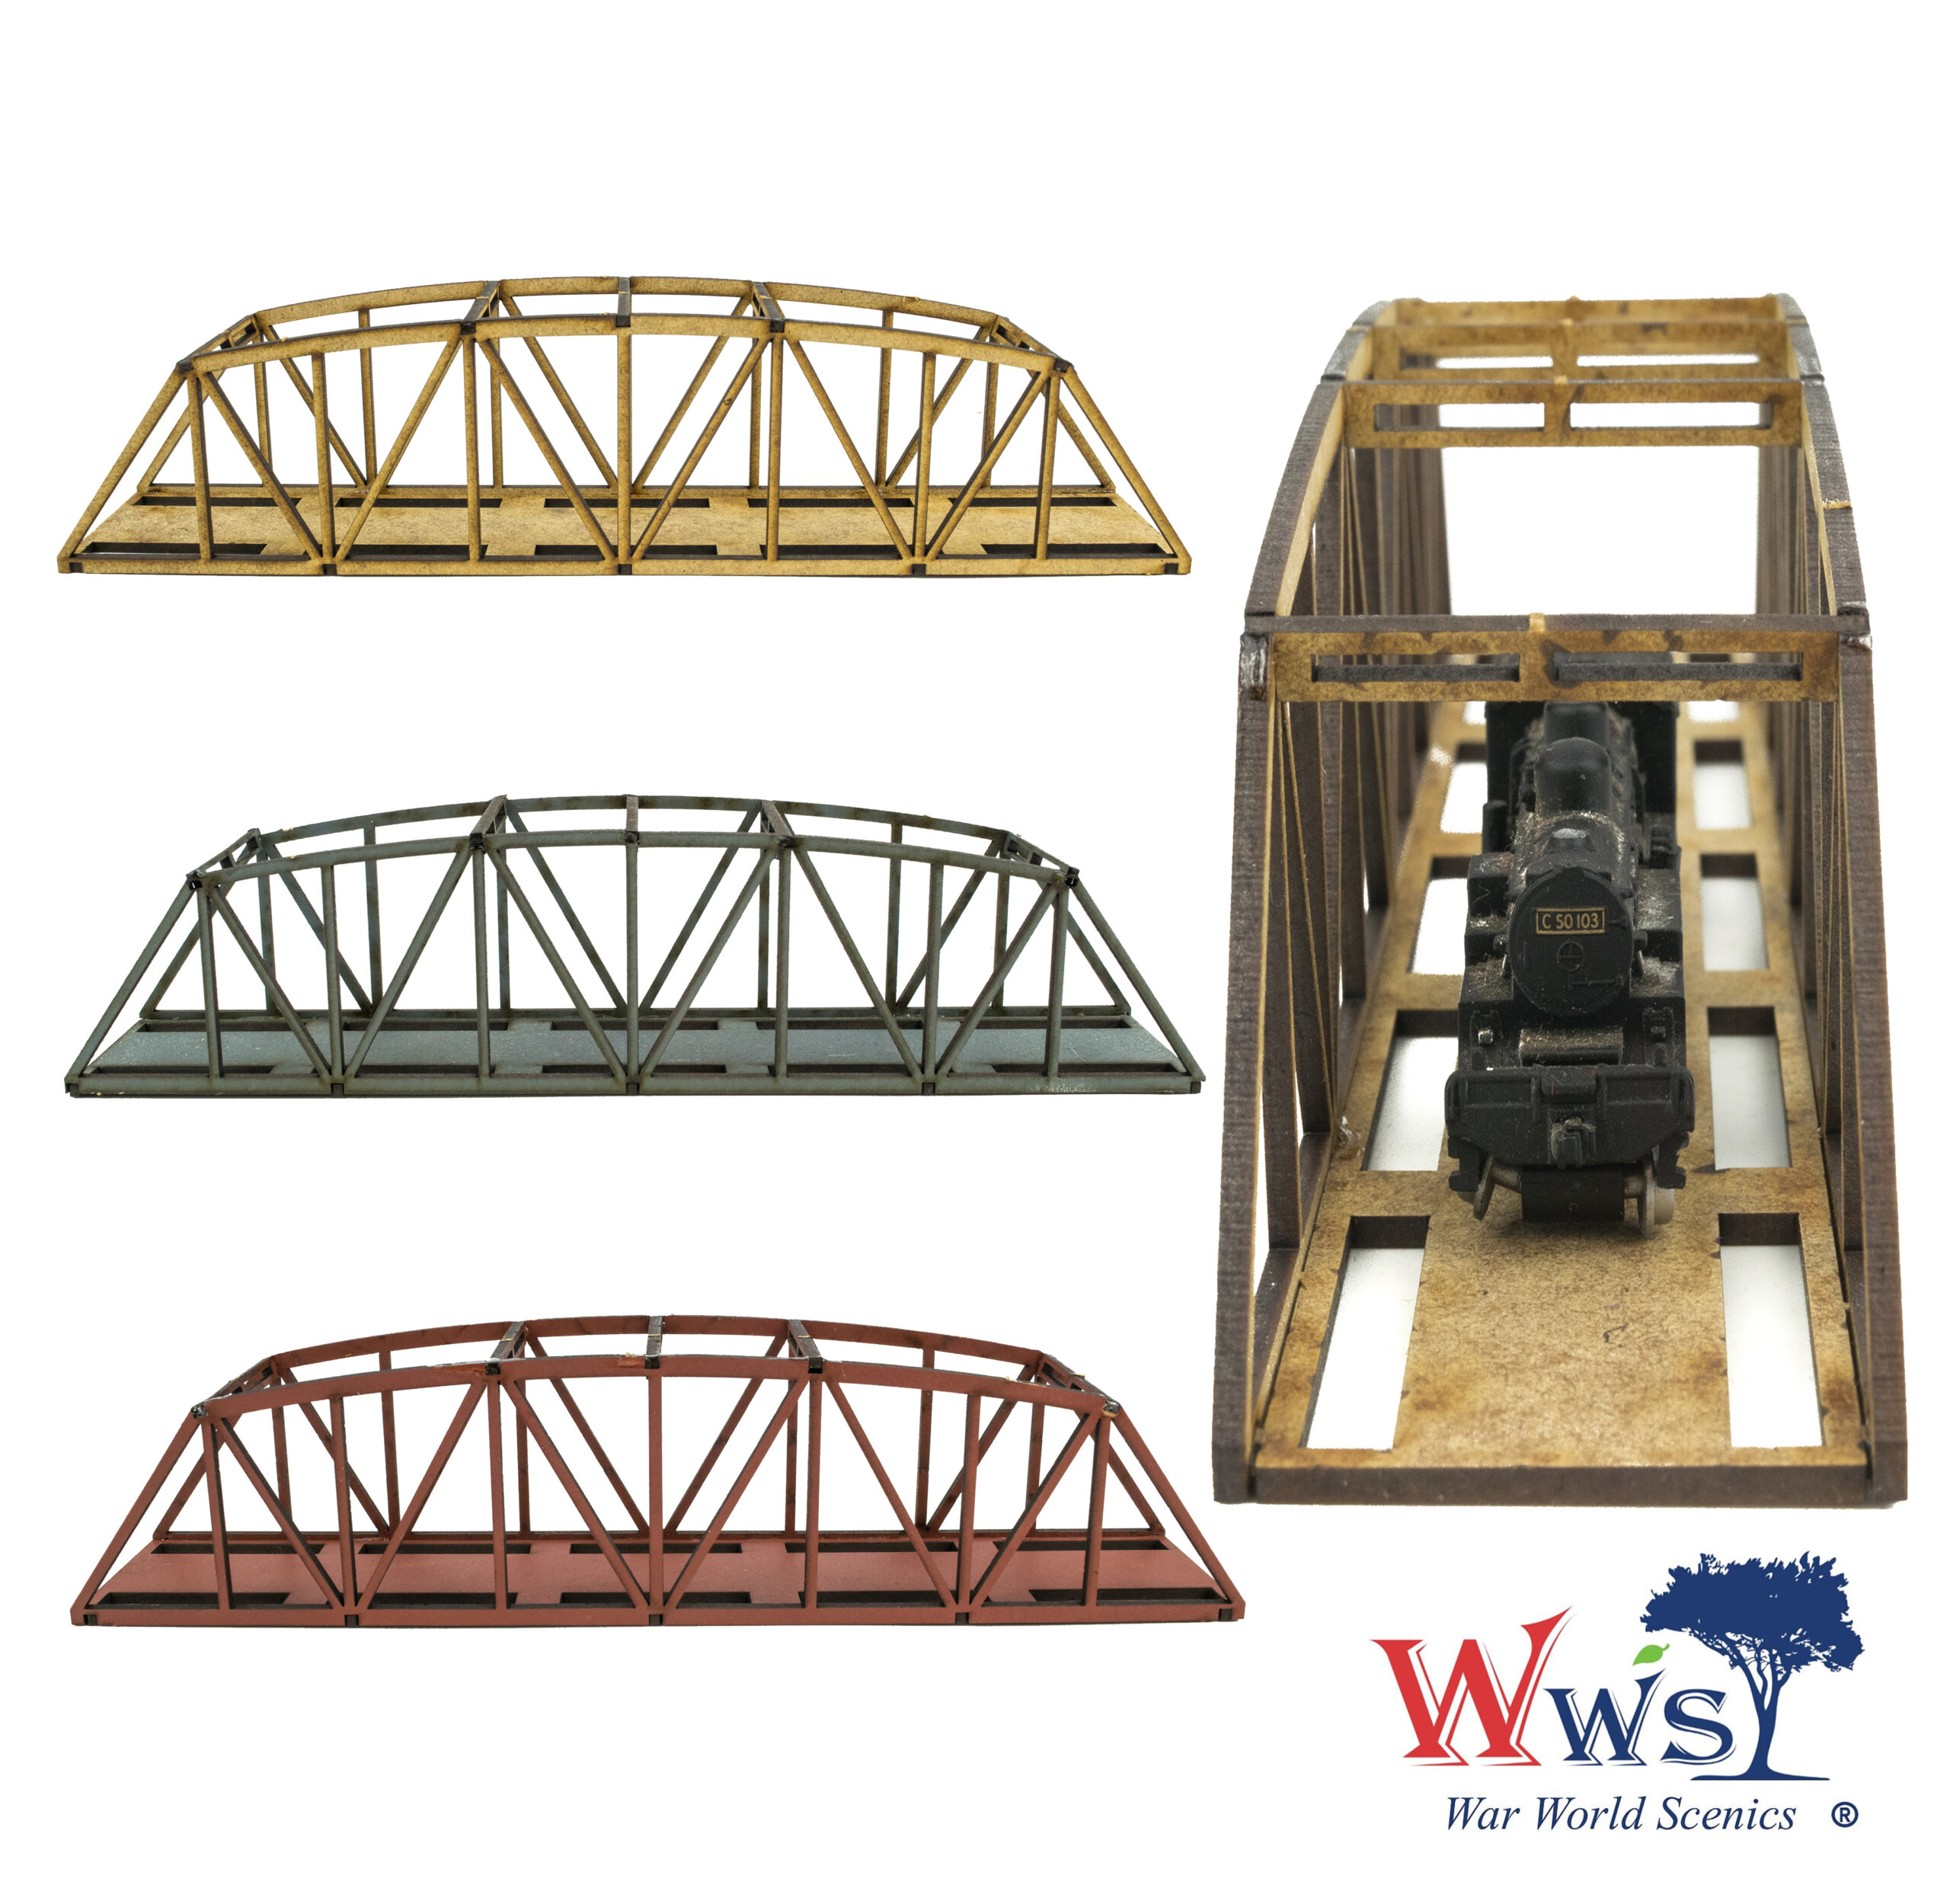 WW Scenics Single Track Camelback Girder Red Bridge S002